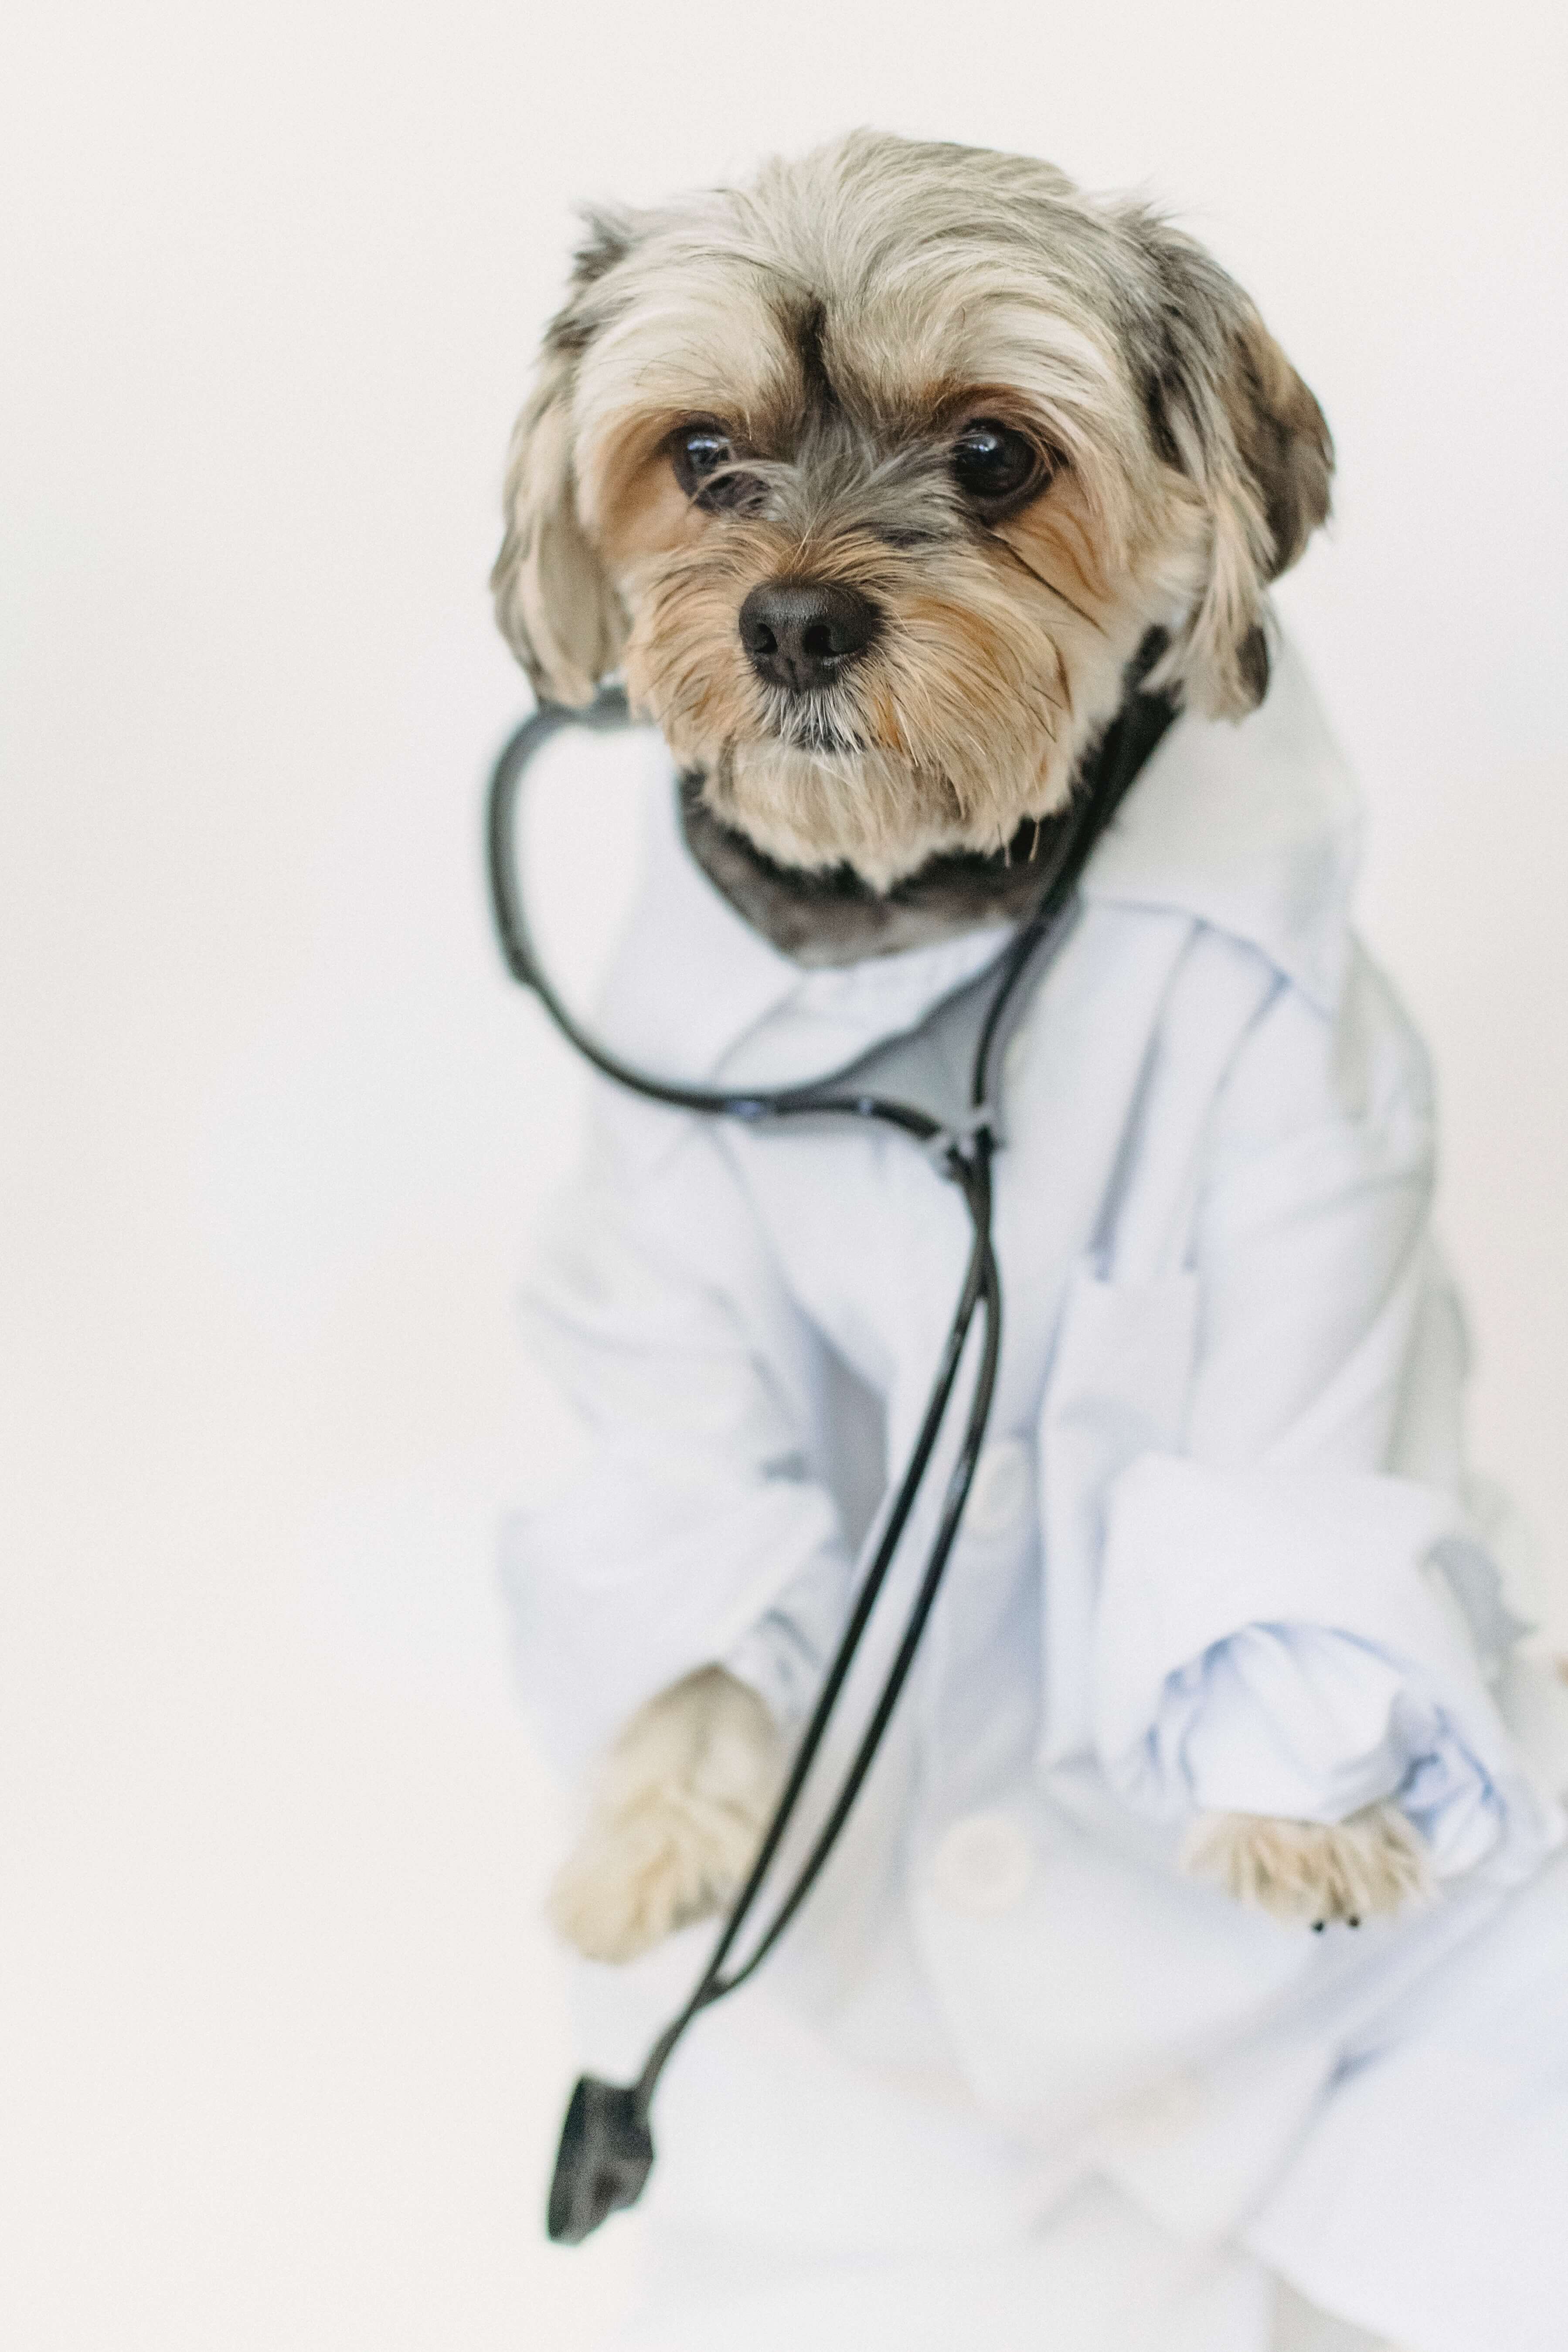 ASPCA pet insurance